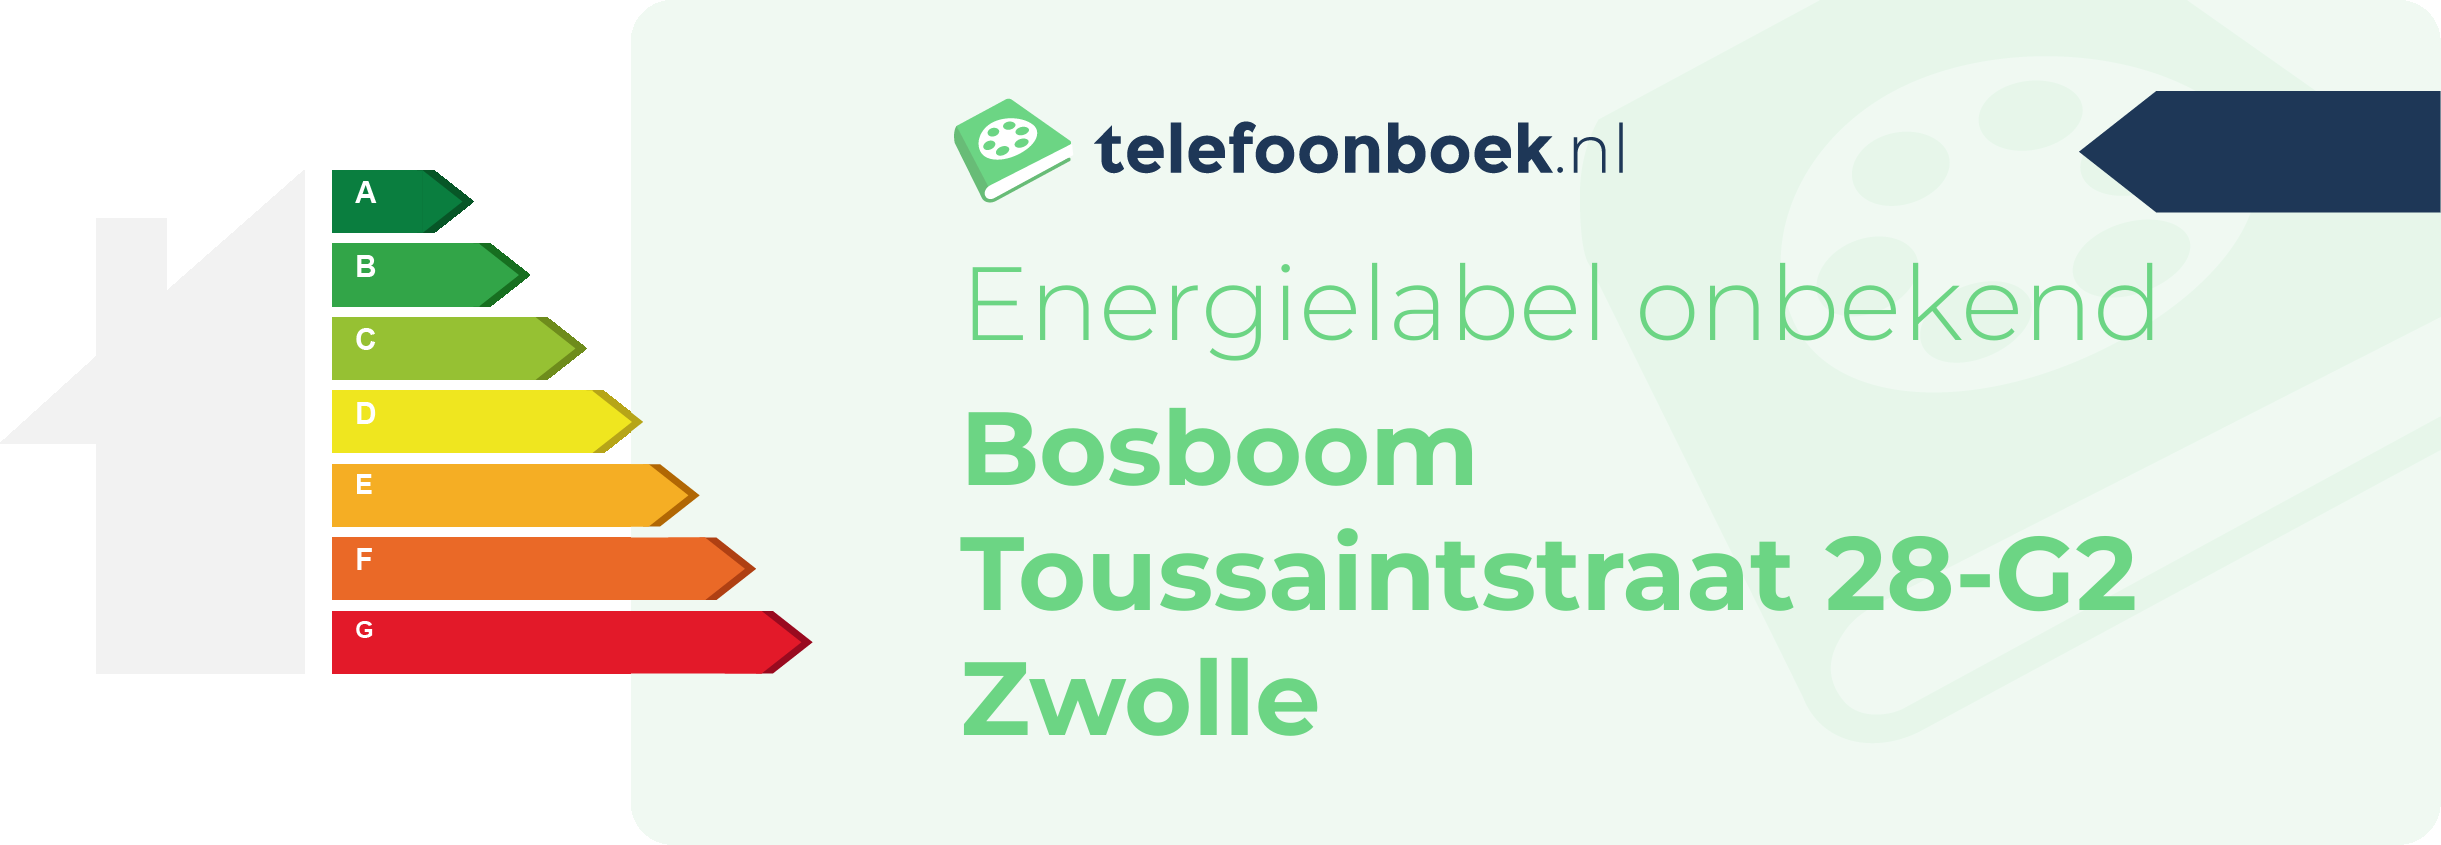 Energielabel Bosboom Toussaintstraat 28-G2 Zwolle